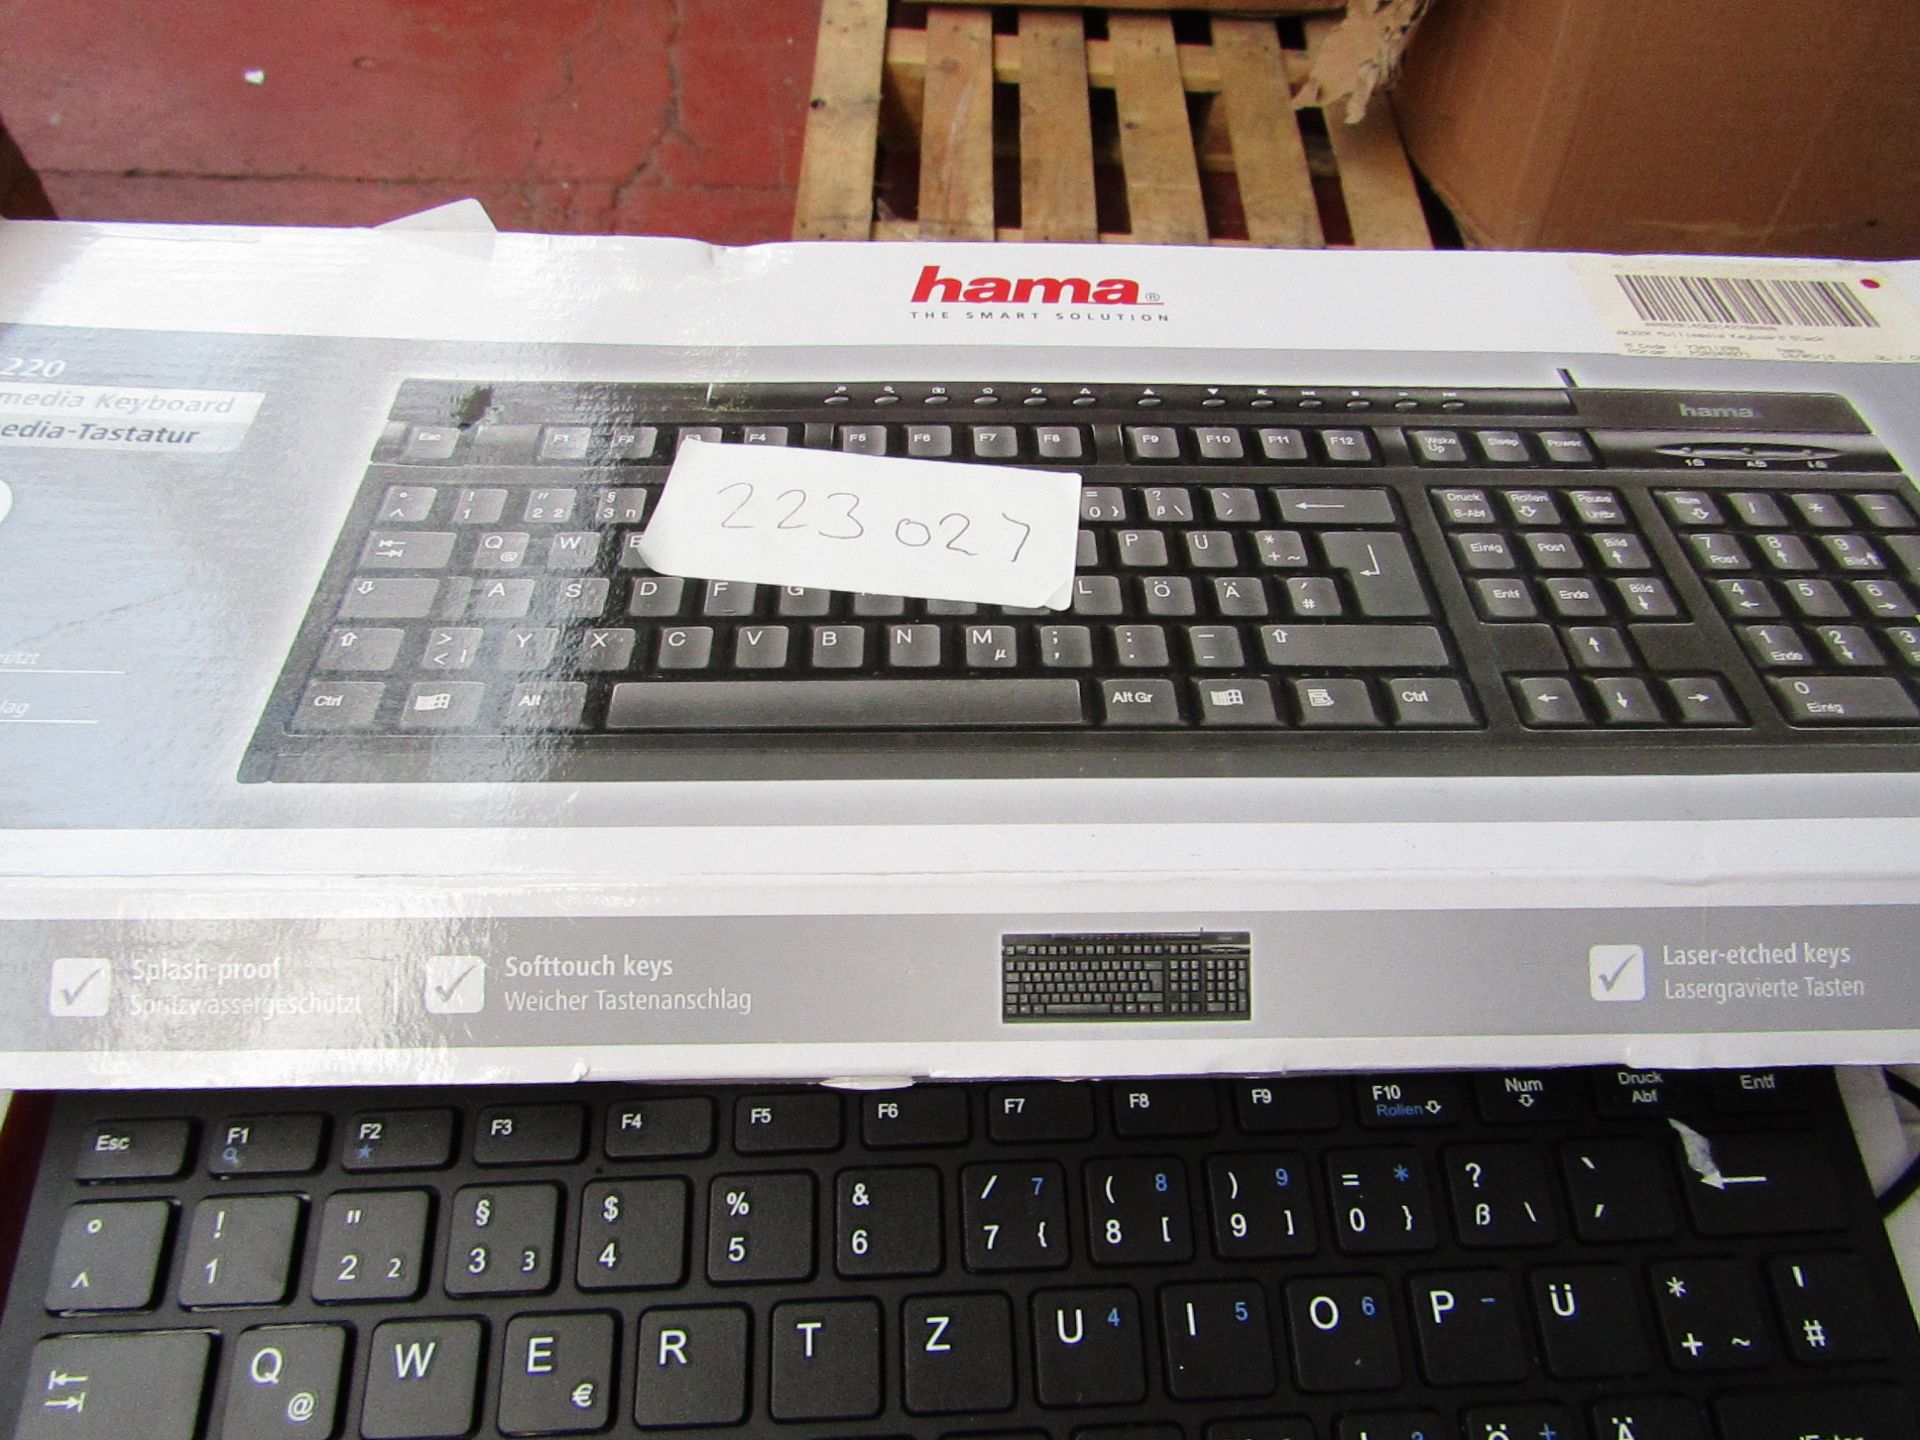 HAMA - Multimedia keyboard AK220 - Untested and boxed.